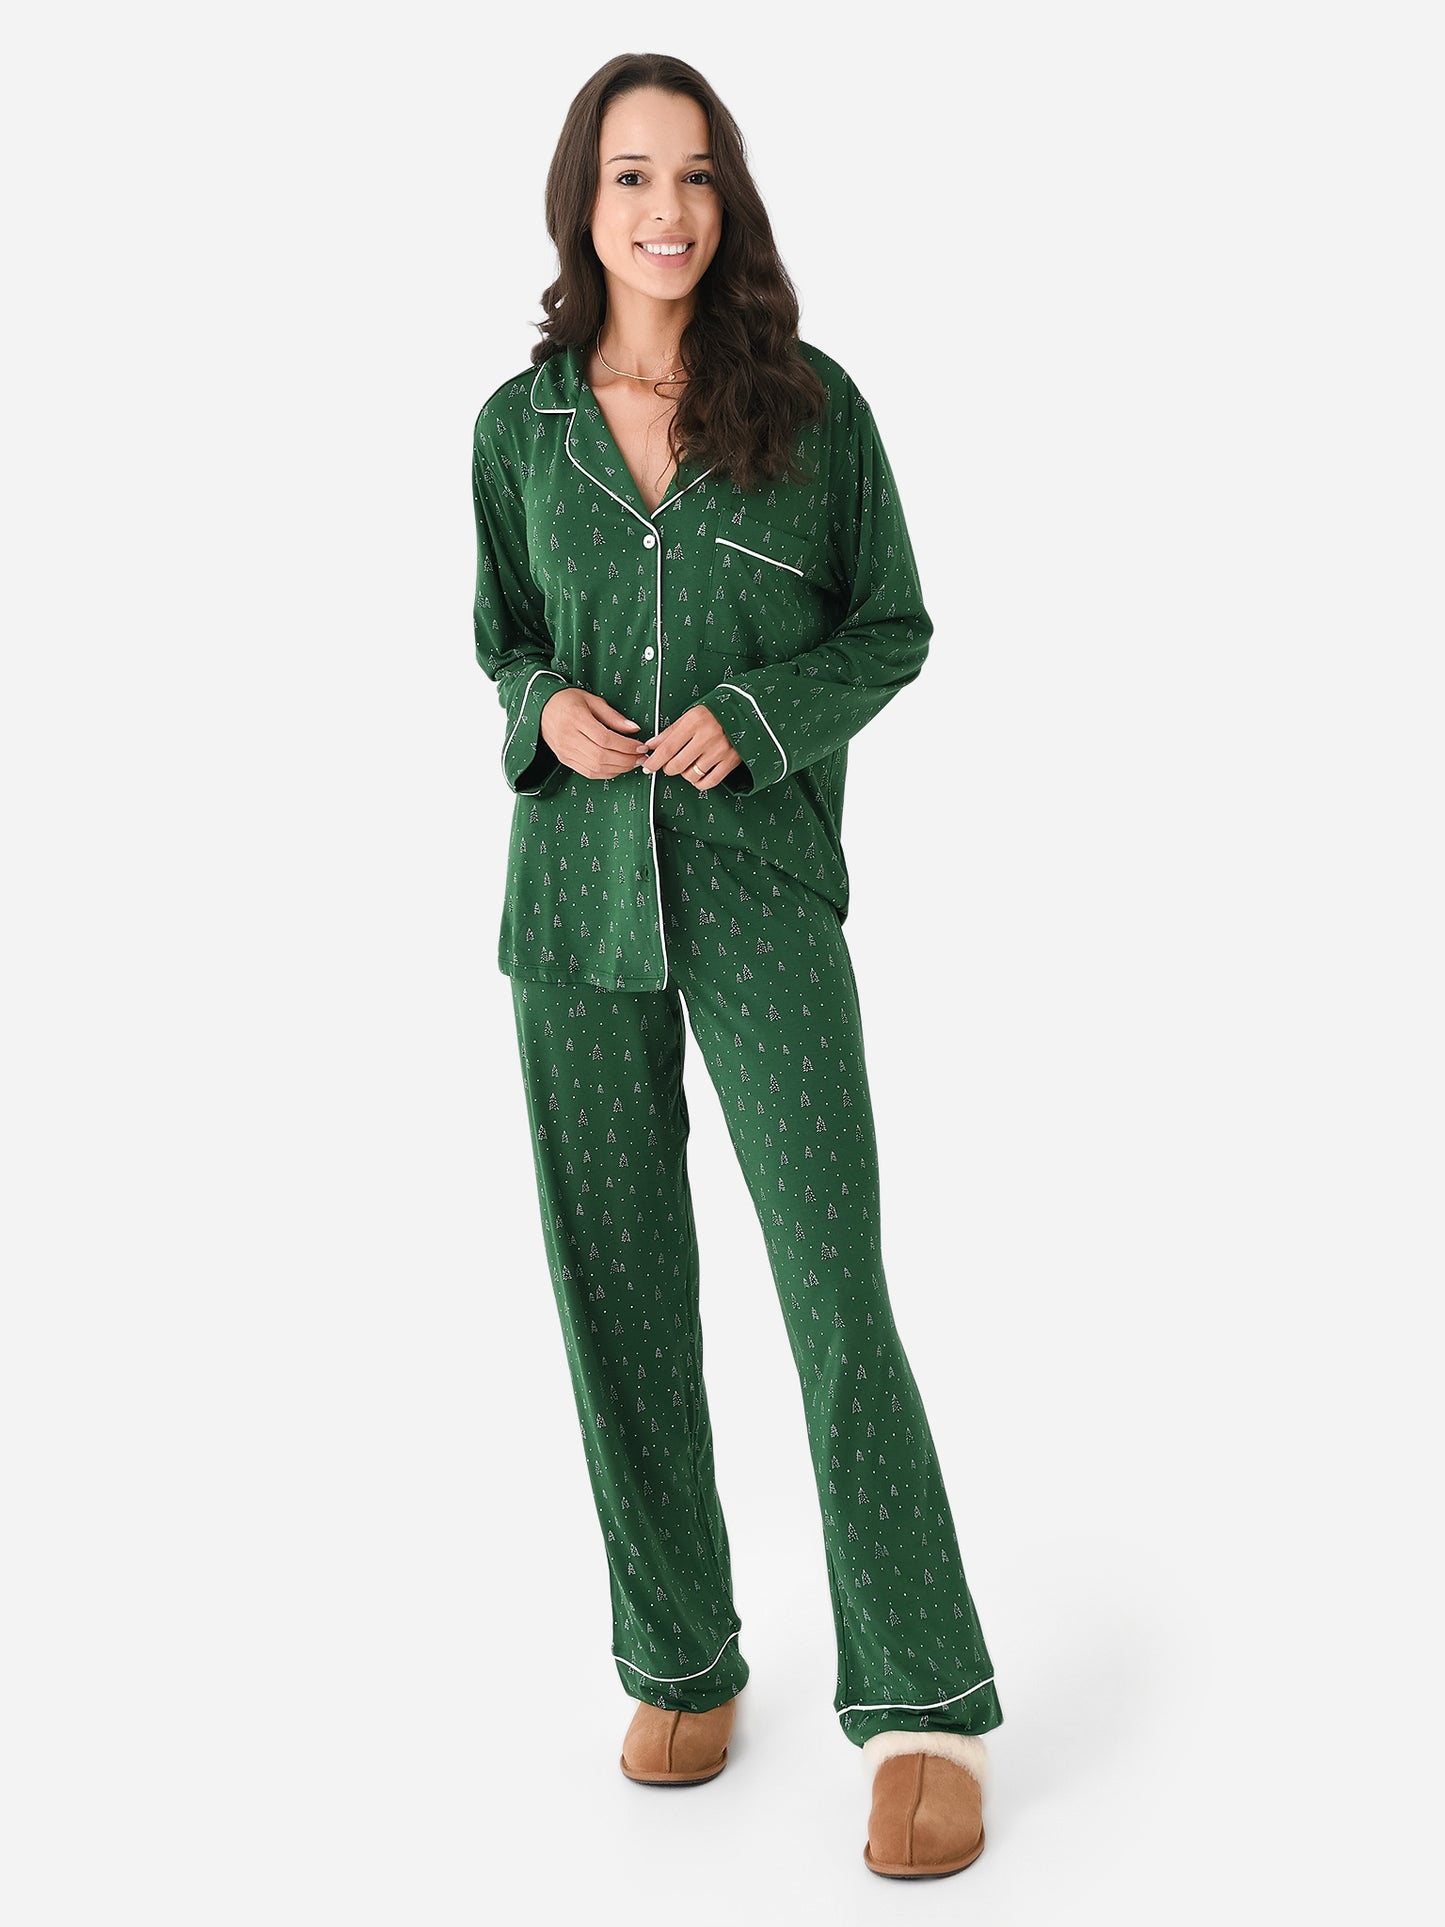 Eberjey Women's Gisele Printed Long Pajama Set